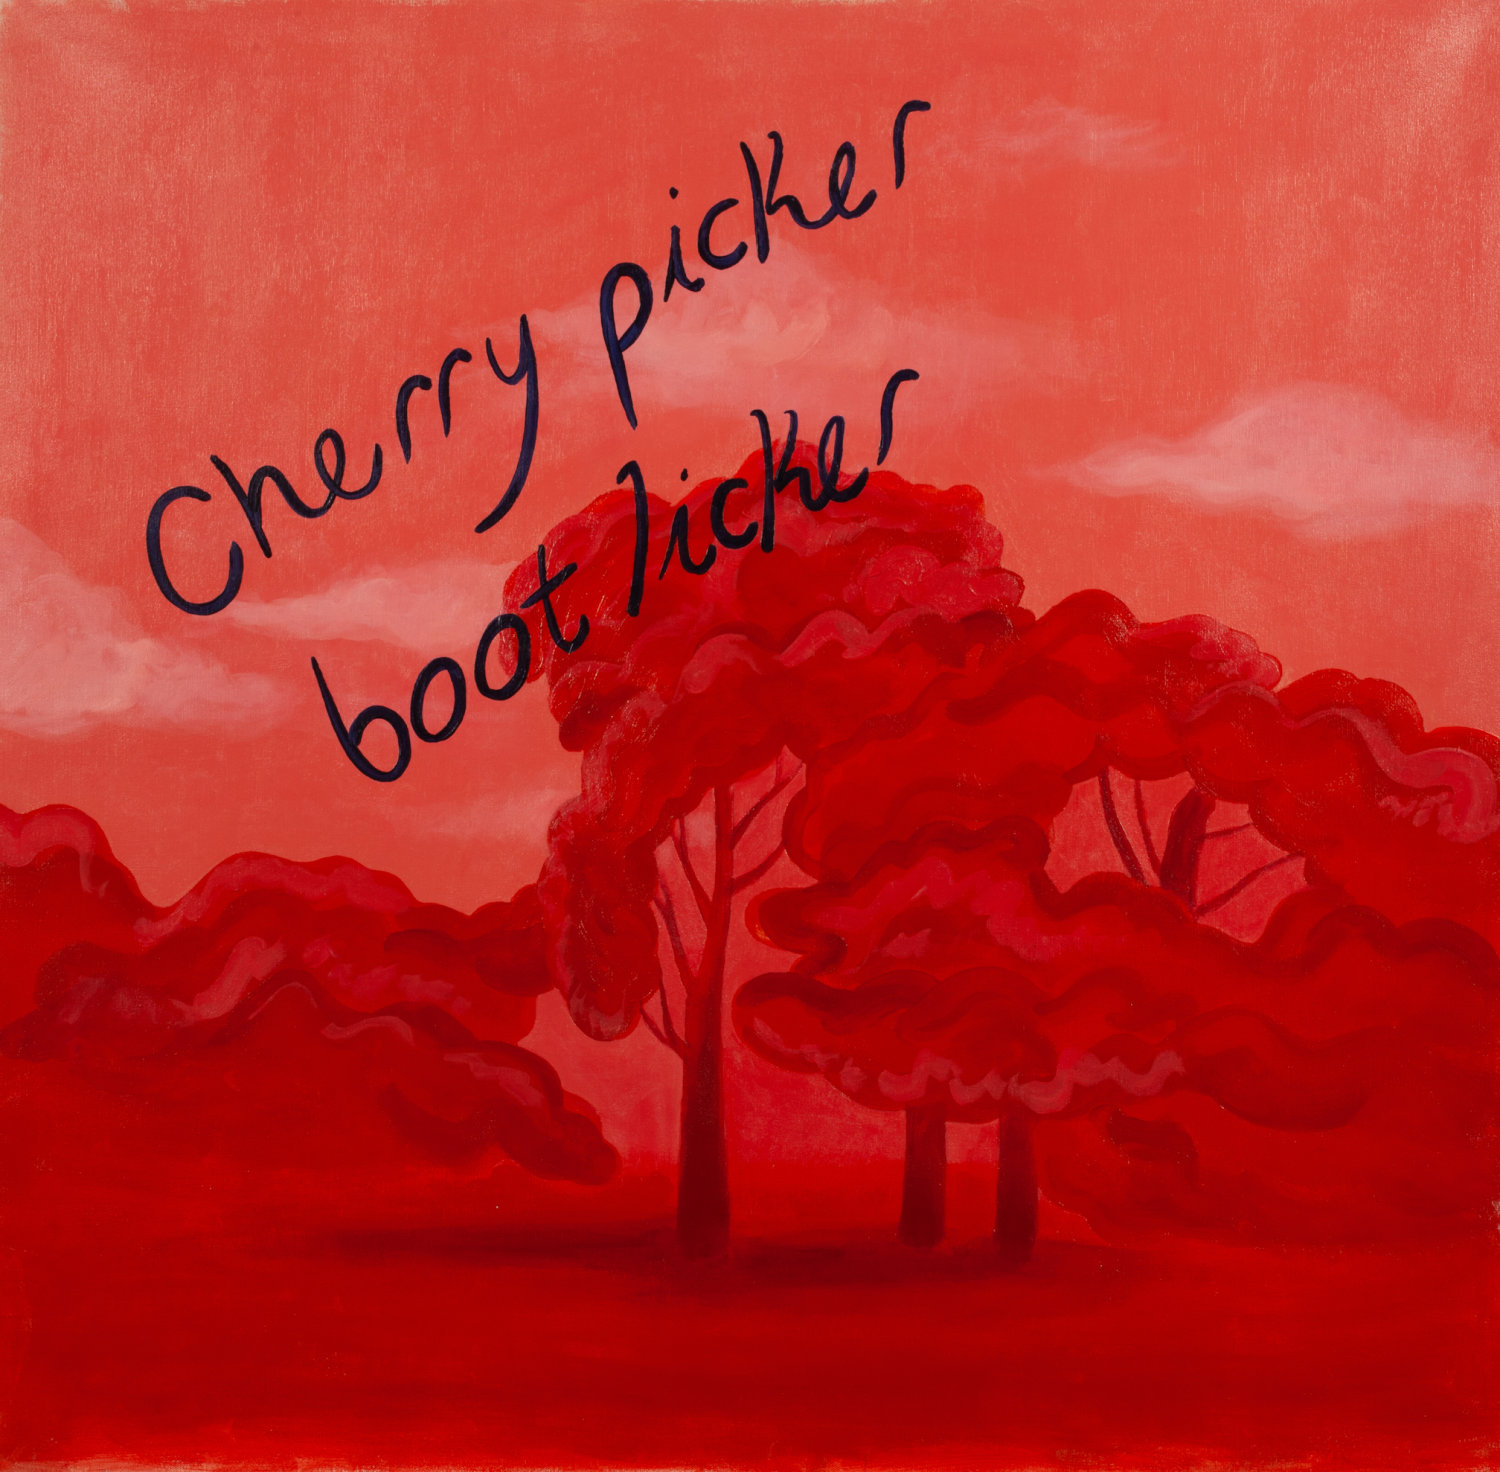 Cherry picker boot licker